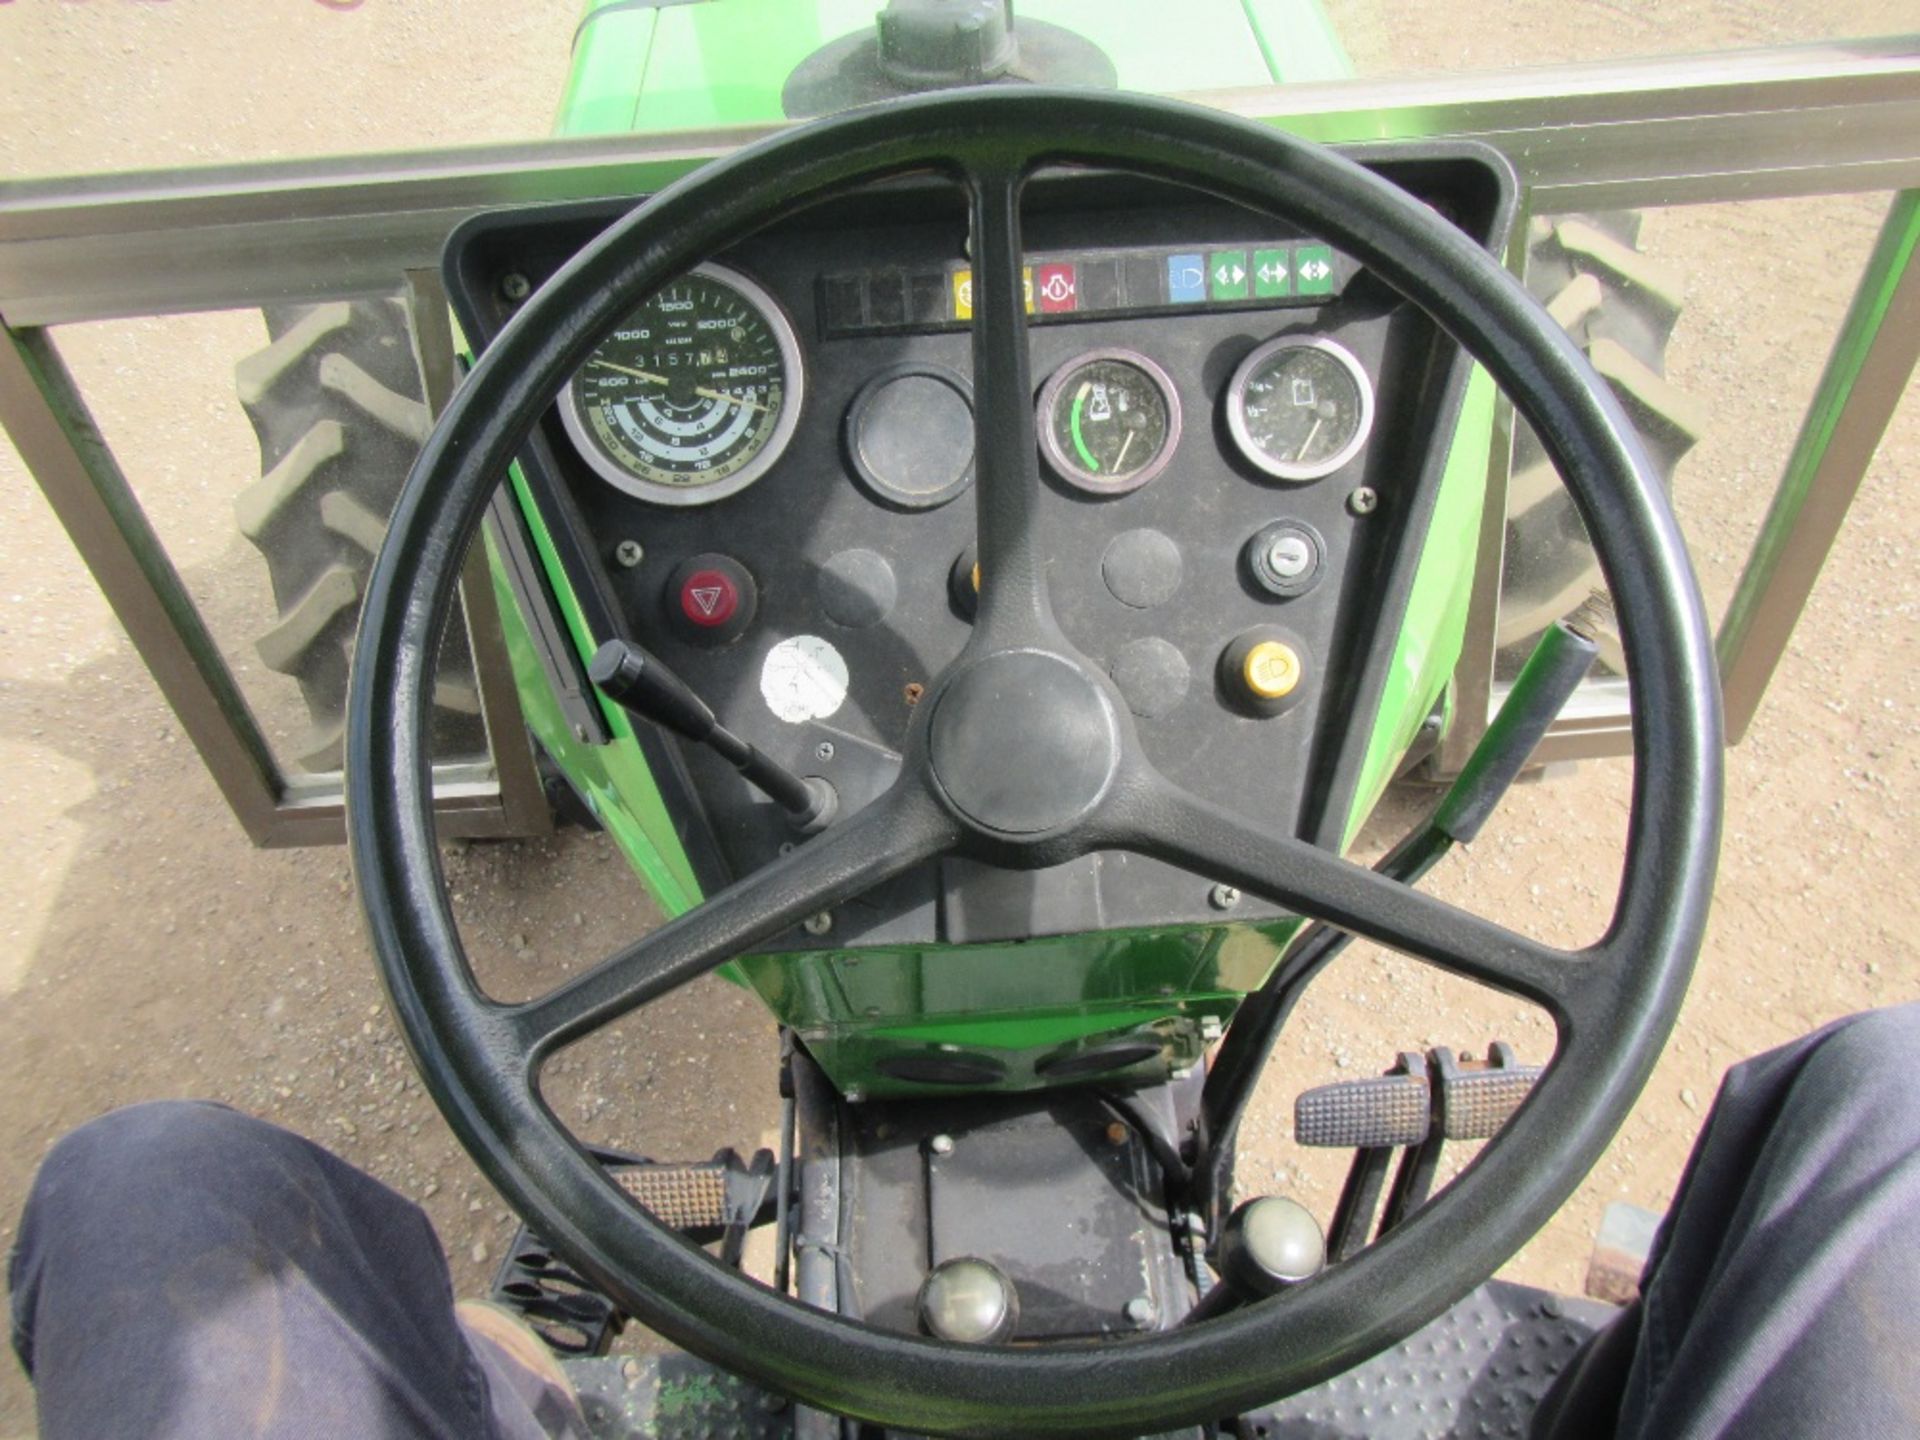 Deutz Fahr DX3.10 4wd Tractor Reg. No. Q499 TKE Hours: 3157 - Image 15 of 17